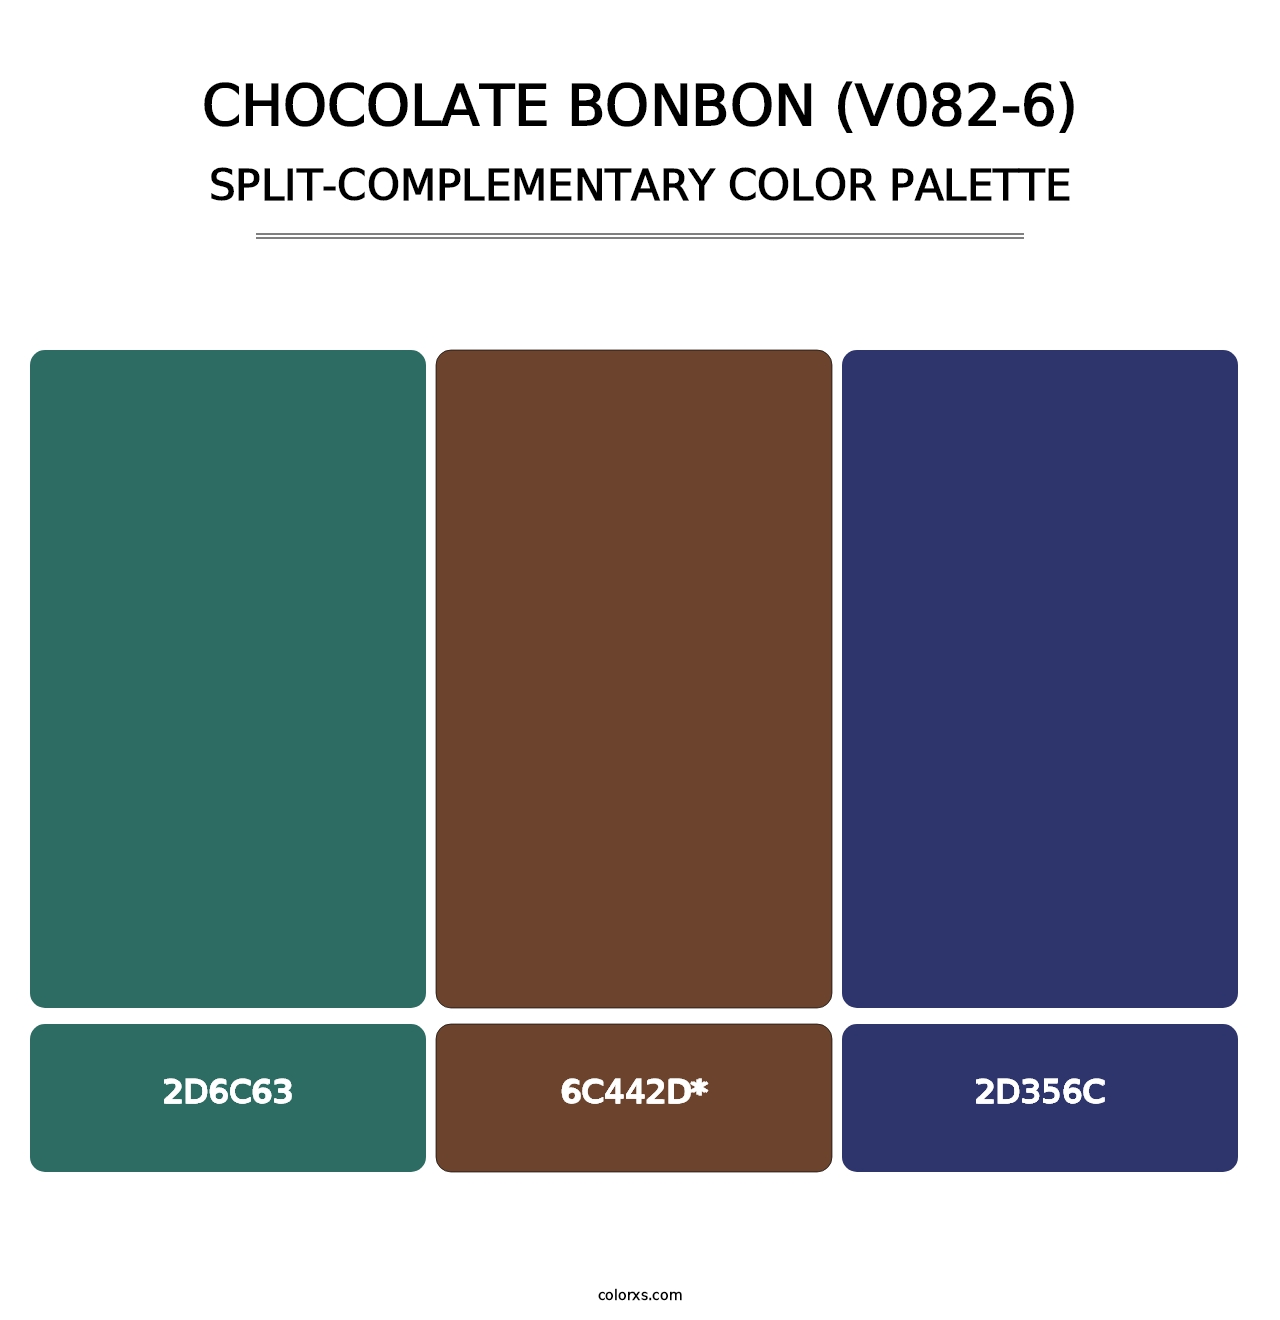 Chocolate Bonbon (V082-6) - Split-Complementary Color Palette